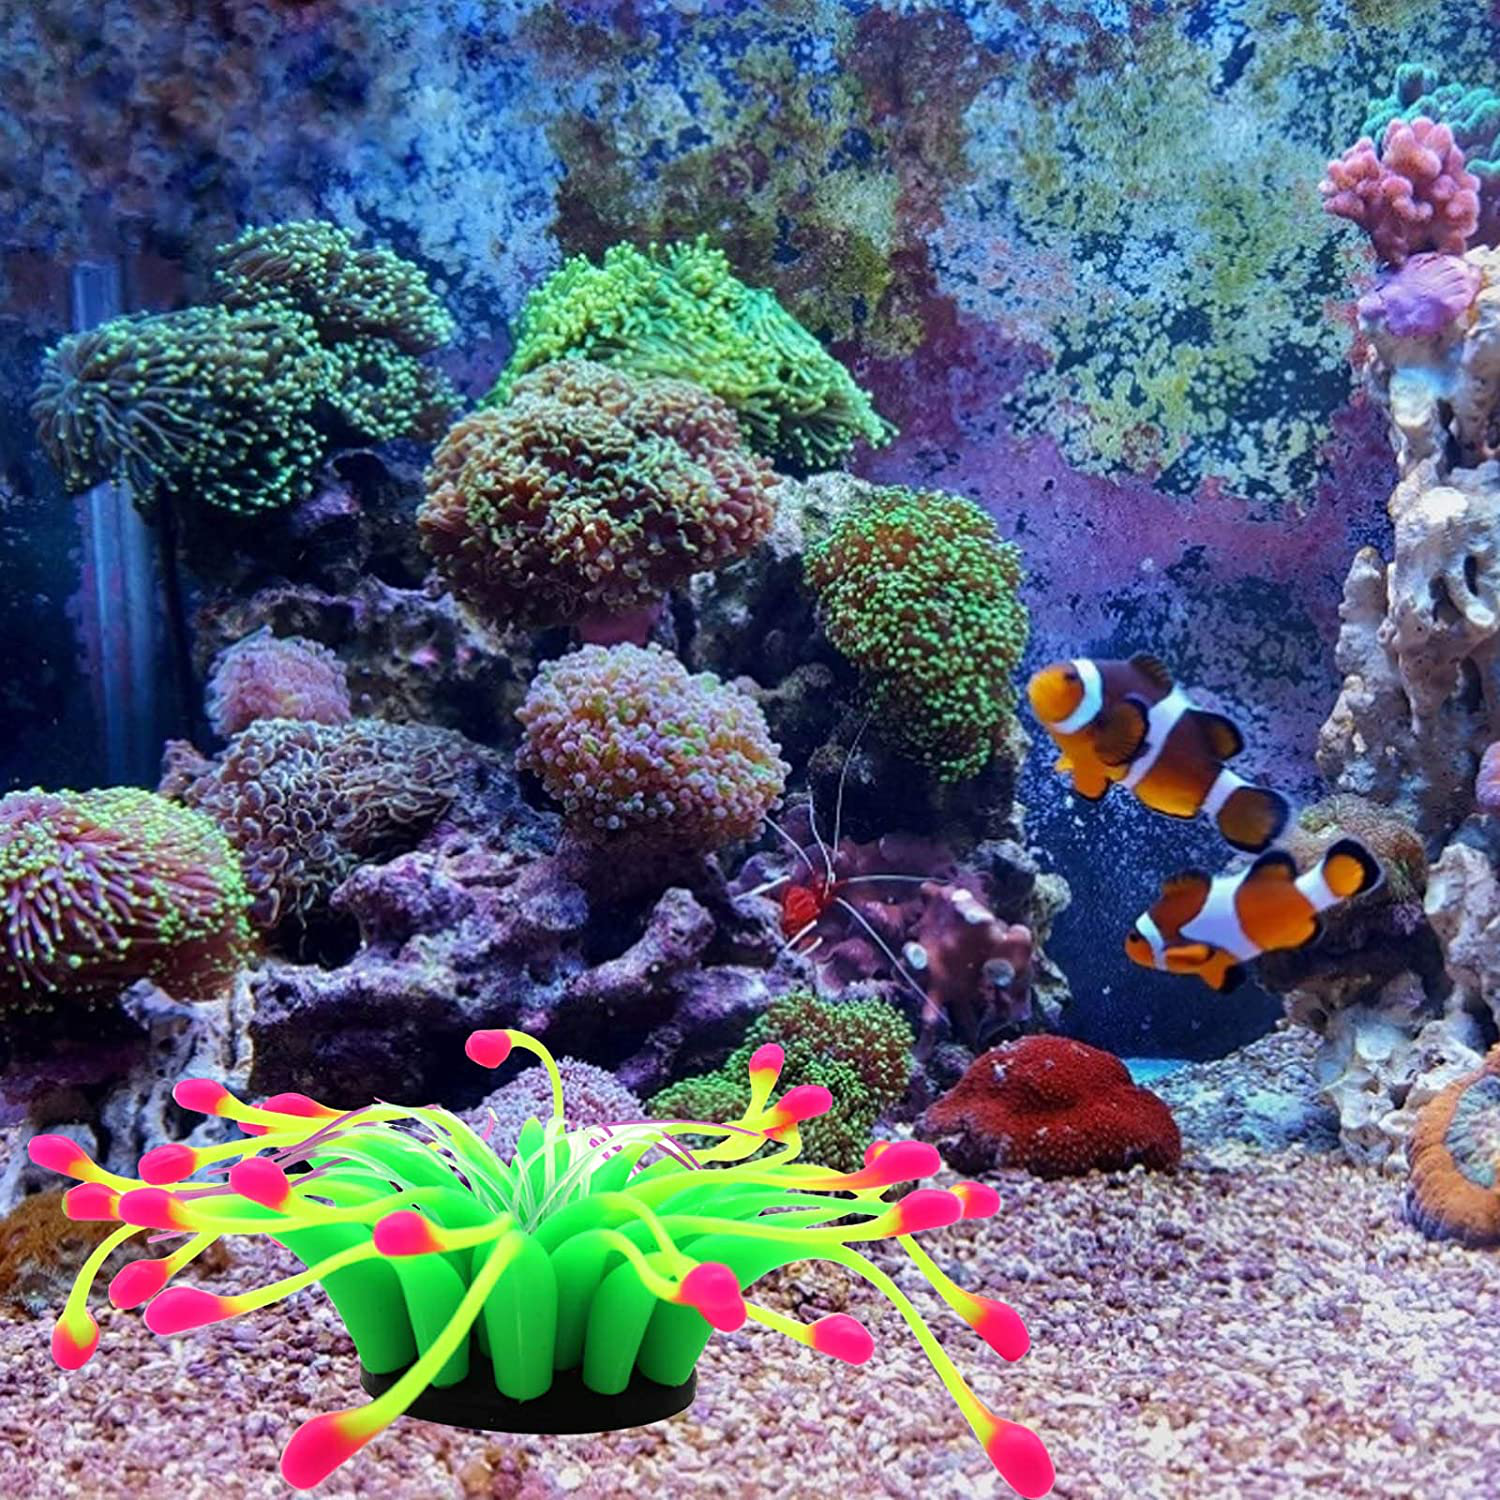 Besimple Glowing Effect Artificial Aquarium Coral Ornament, Soft Silicone Gooseneck/Lotus Coral Glow in the Dark, Fish Tank Plants Decoration for Aquarium Landscape Animals & Pet Supplies > Pet Supplies > Fish Supplies > Aquarium Decor Besimple   